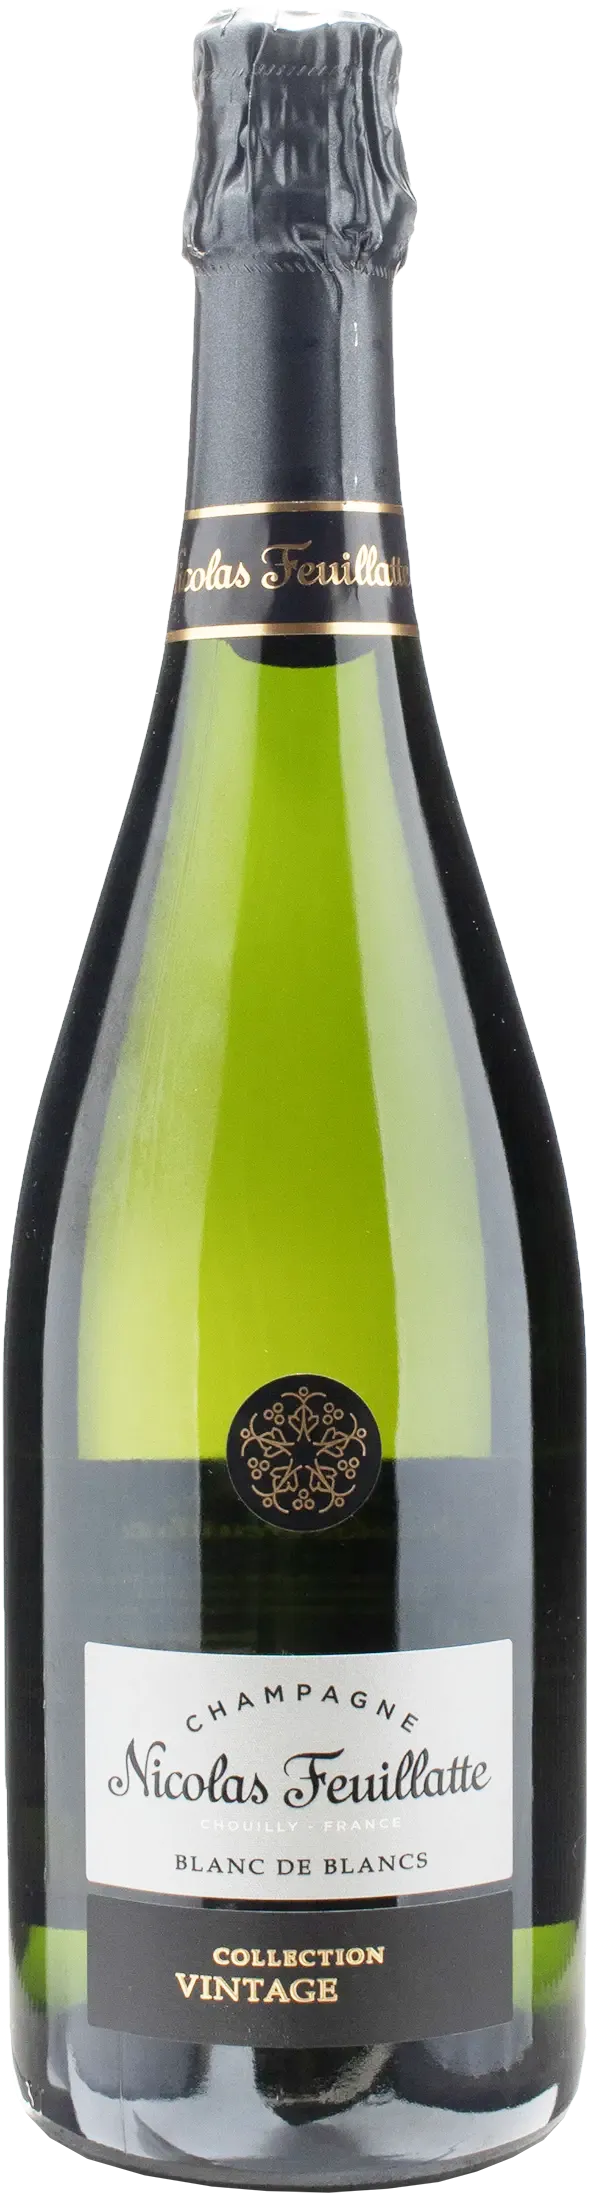 nicolas feuillatte champagne collection brut 2017